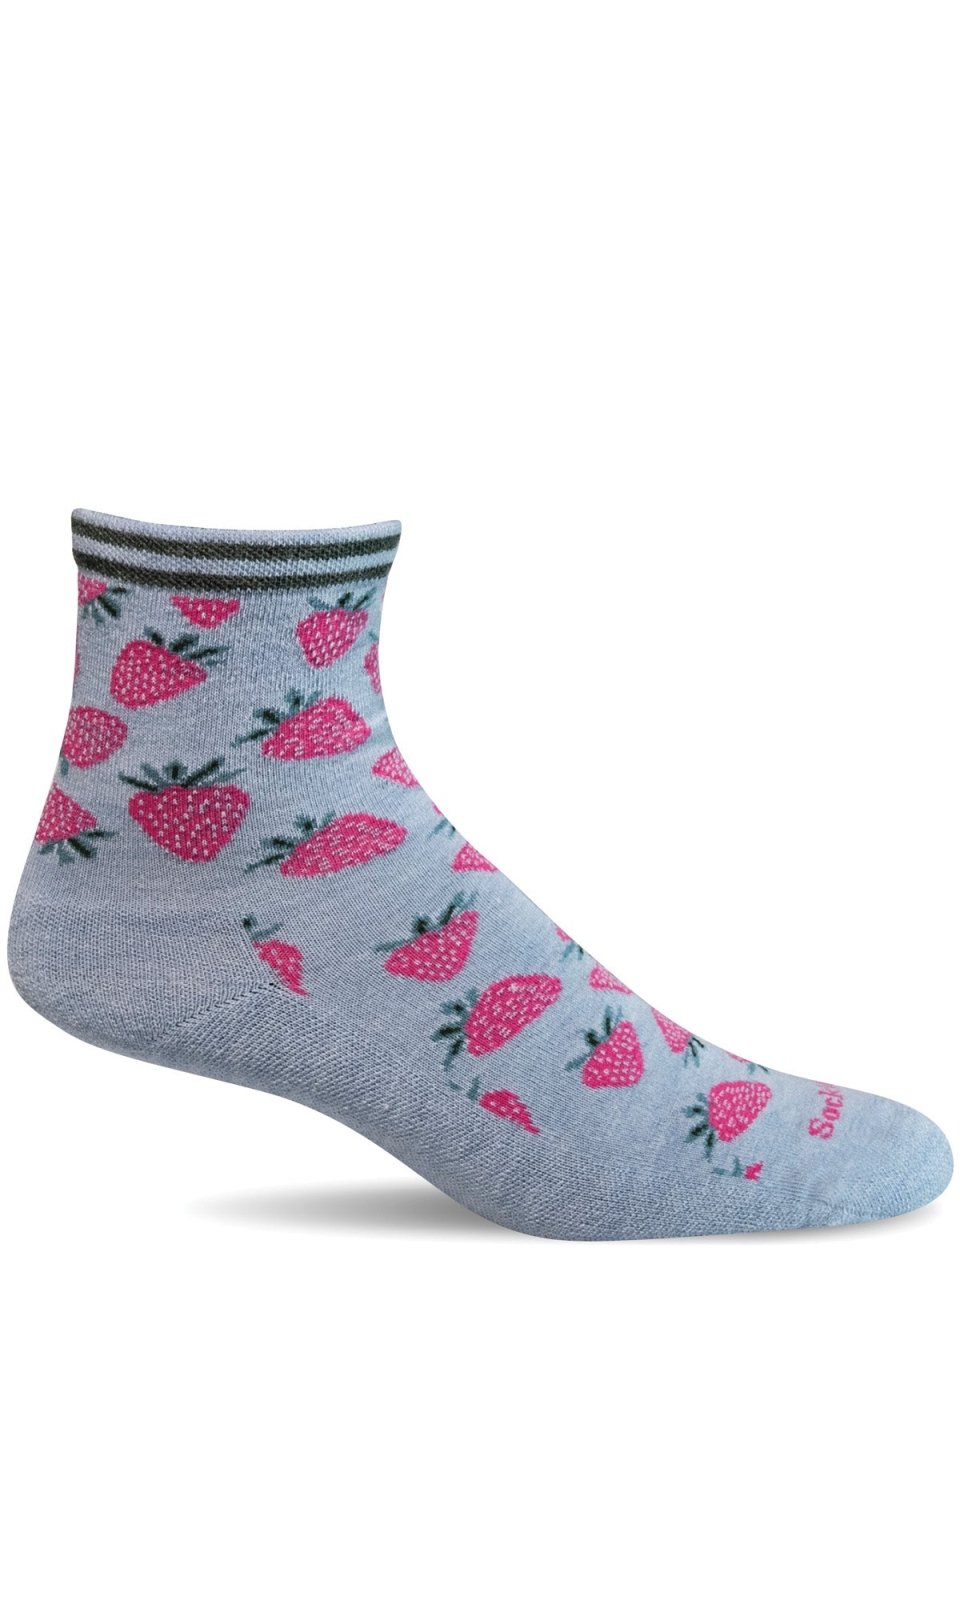 Women's Strawberry | Essential Comfort Socks - Merino Wool Essential Comfort - Sockwell